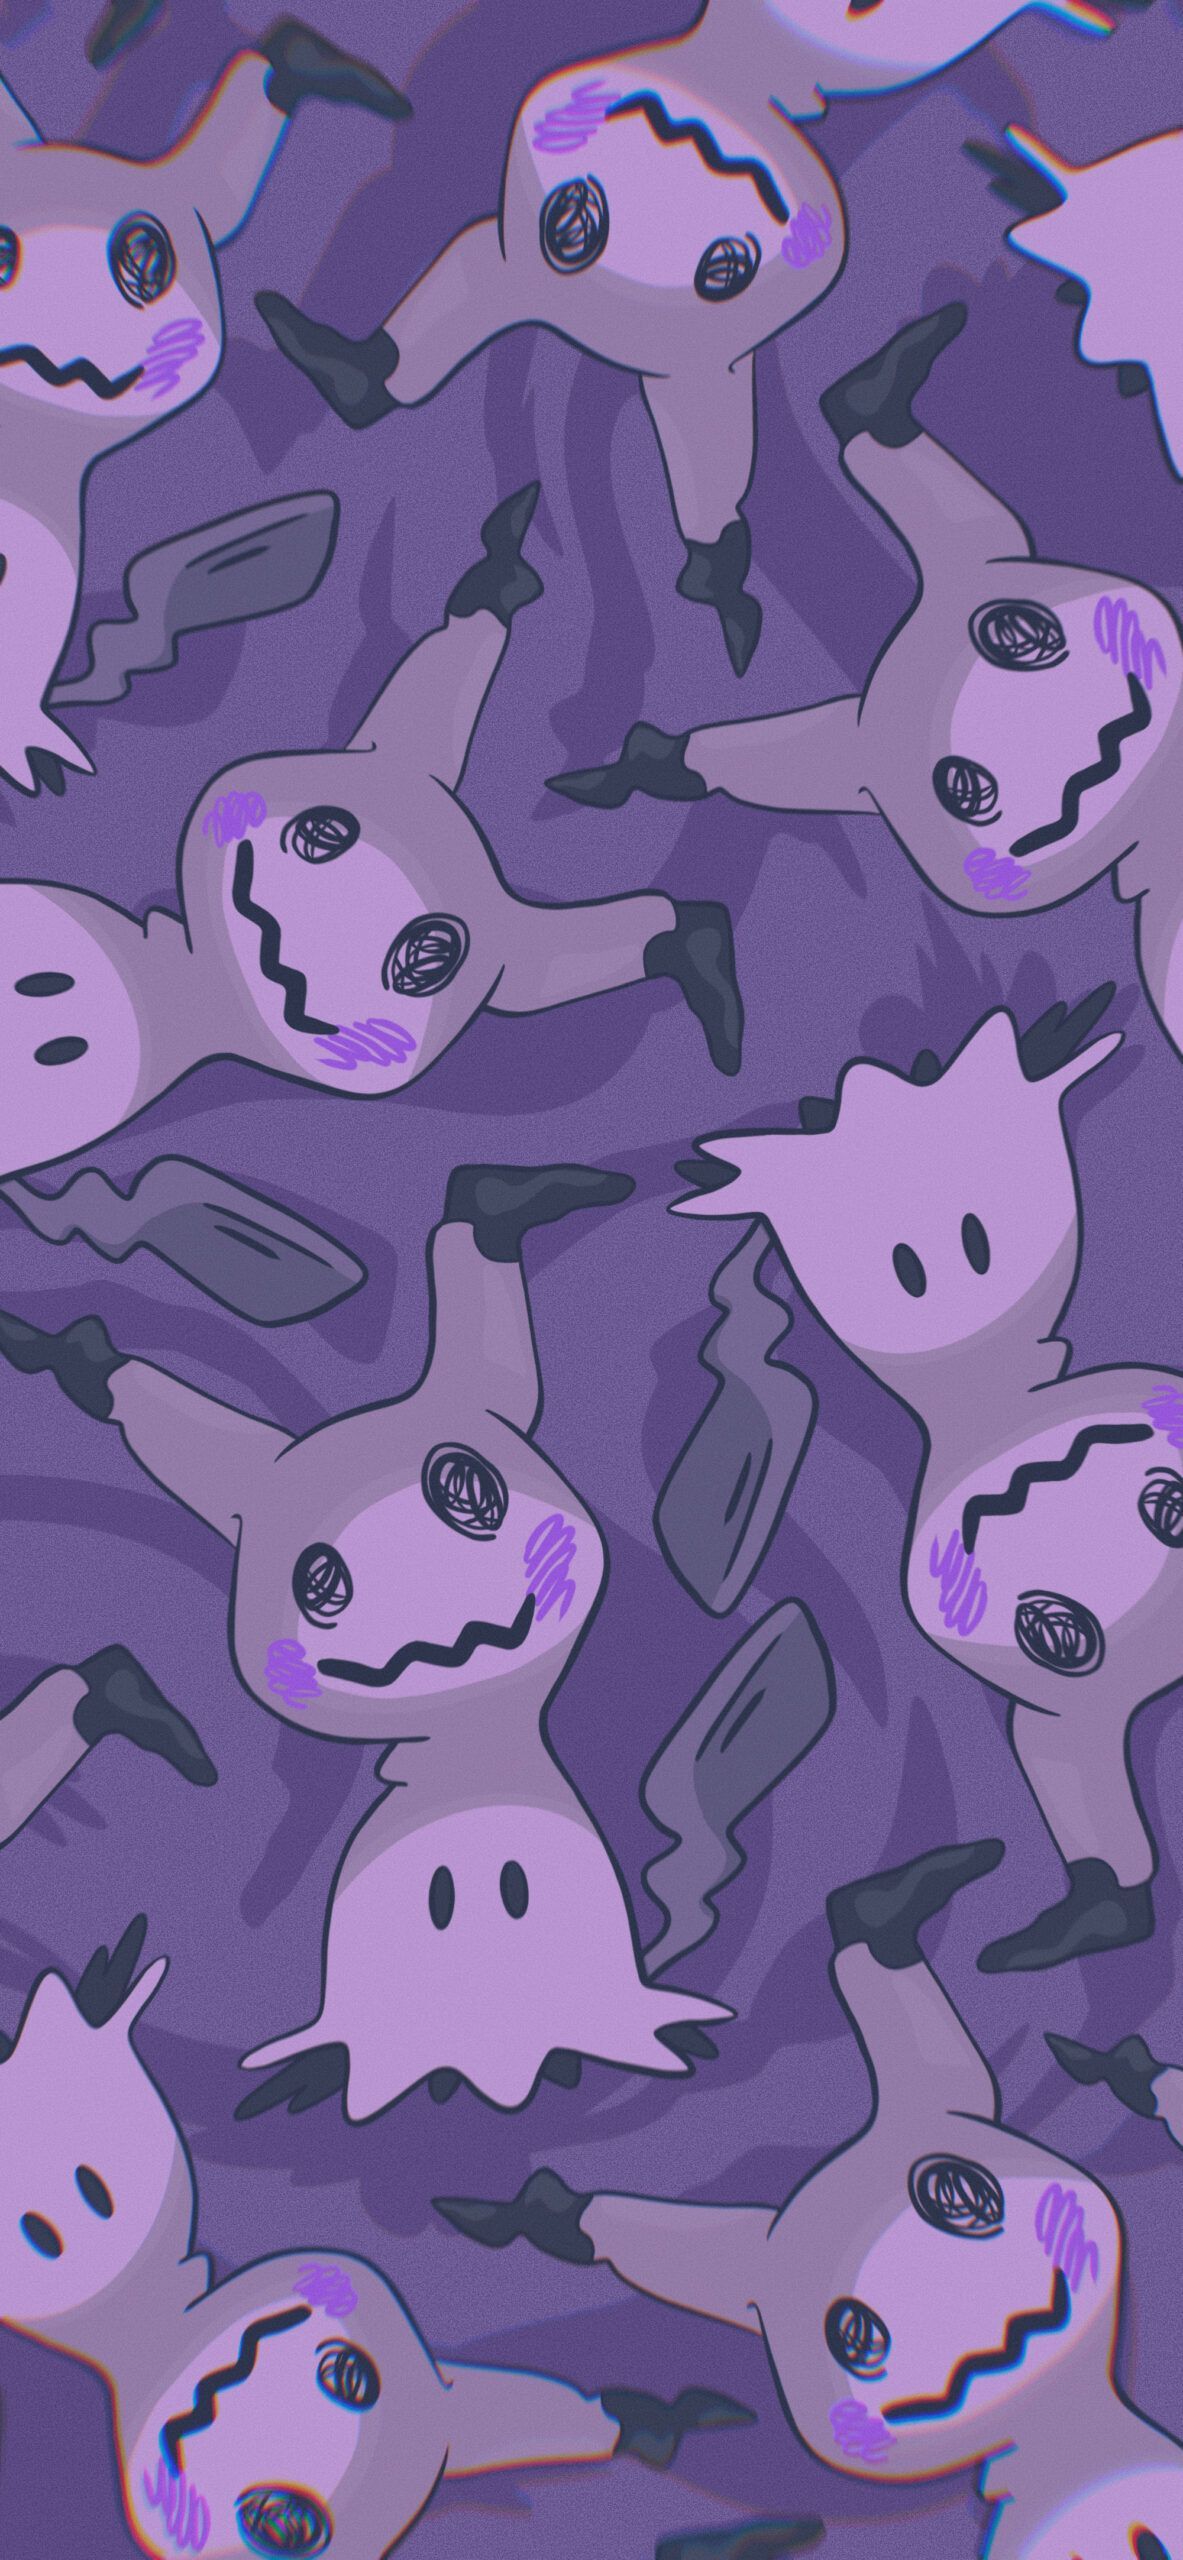 Wallpaper of purple ghosts on a purple background - Pokemon, Pikachu